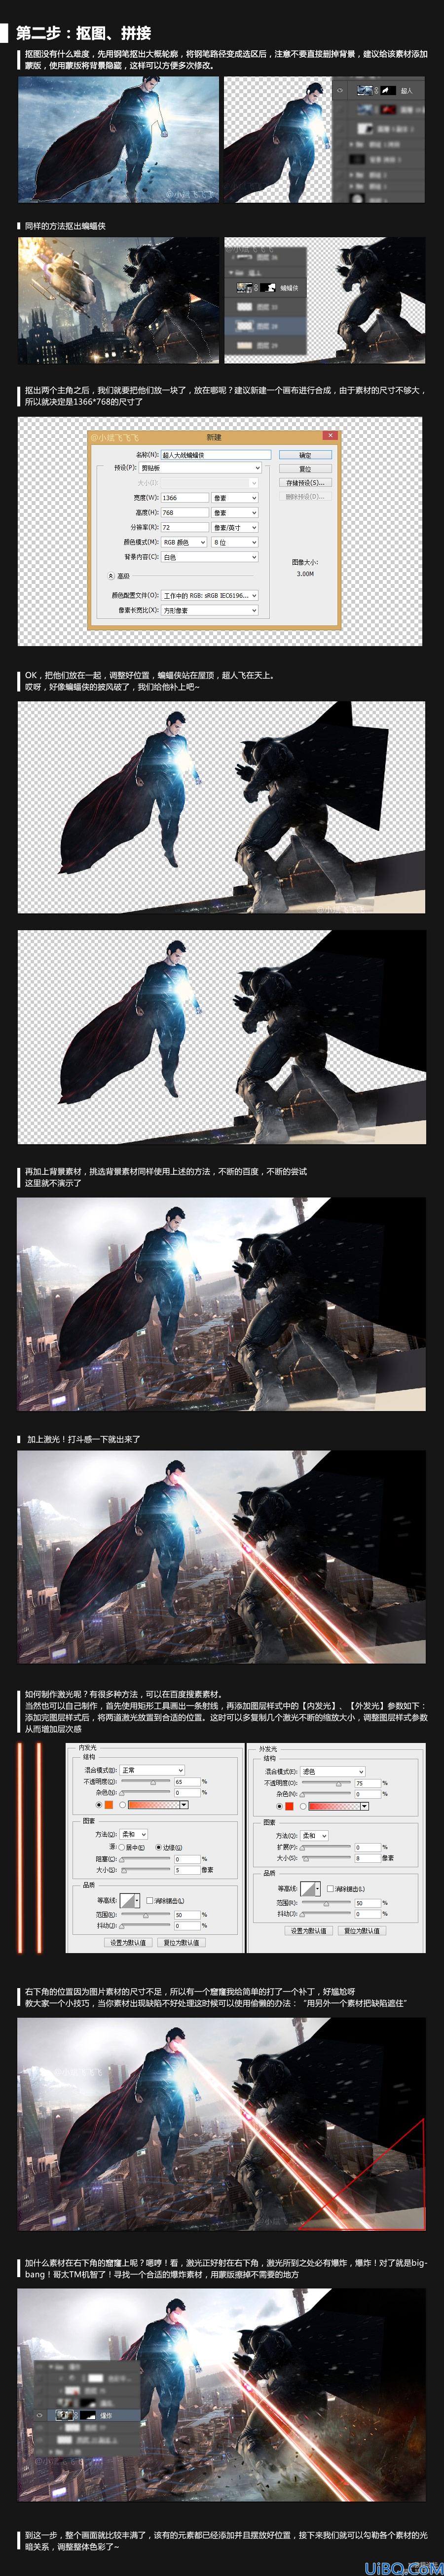 Photoshop合成超人大战蝙蝠侠场景—超详细教程